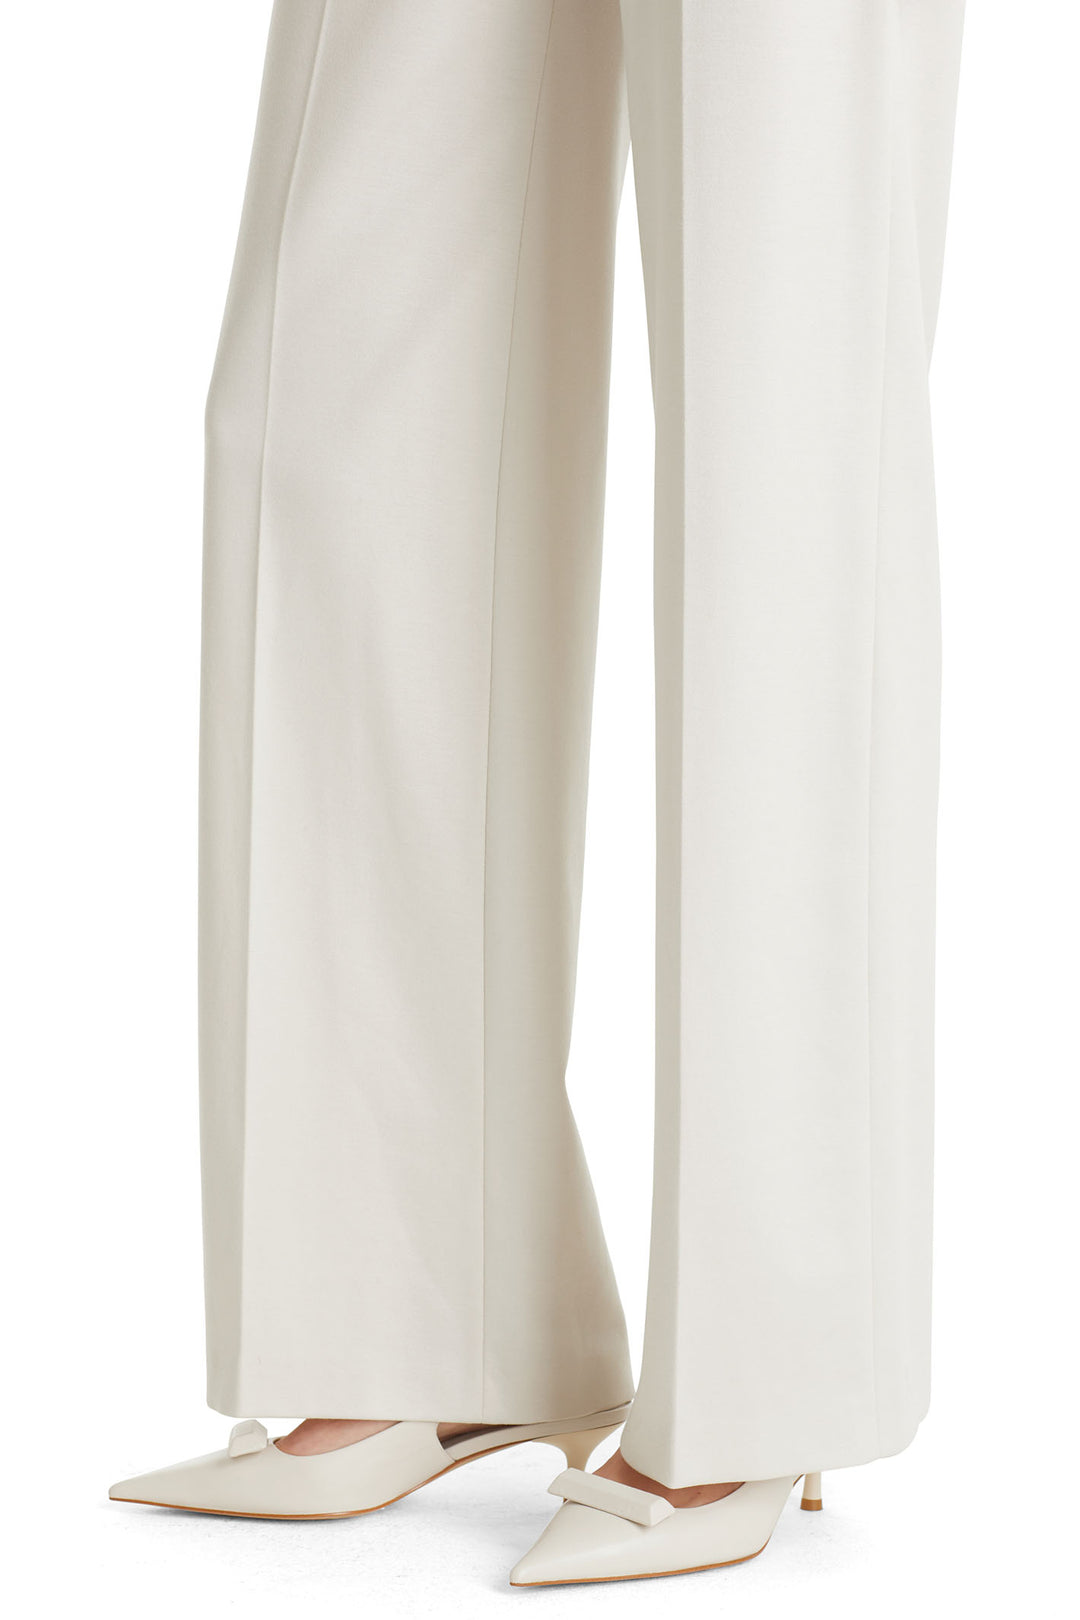 Marc Cain Additions WA 81.05 J24 182 Smoke Cream Pull-On Trousers - Olivia Grace Fashion